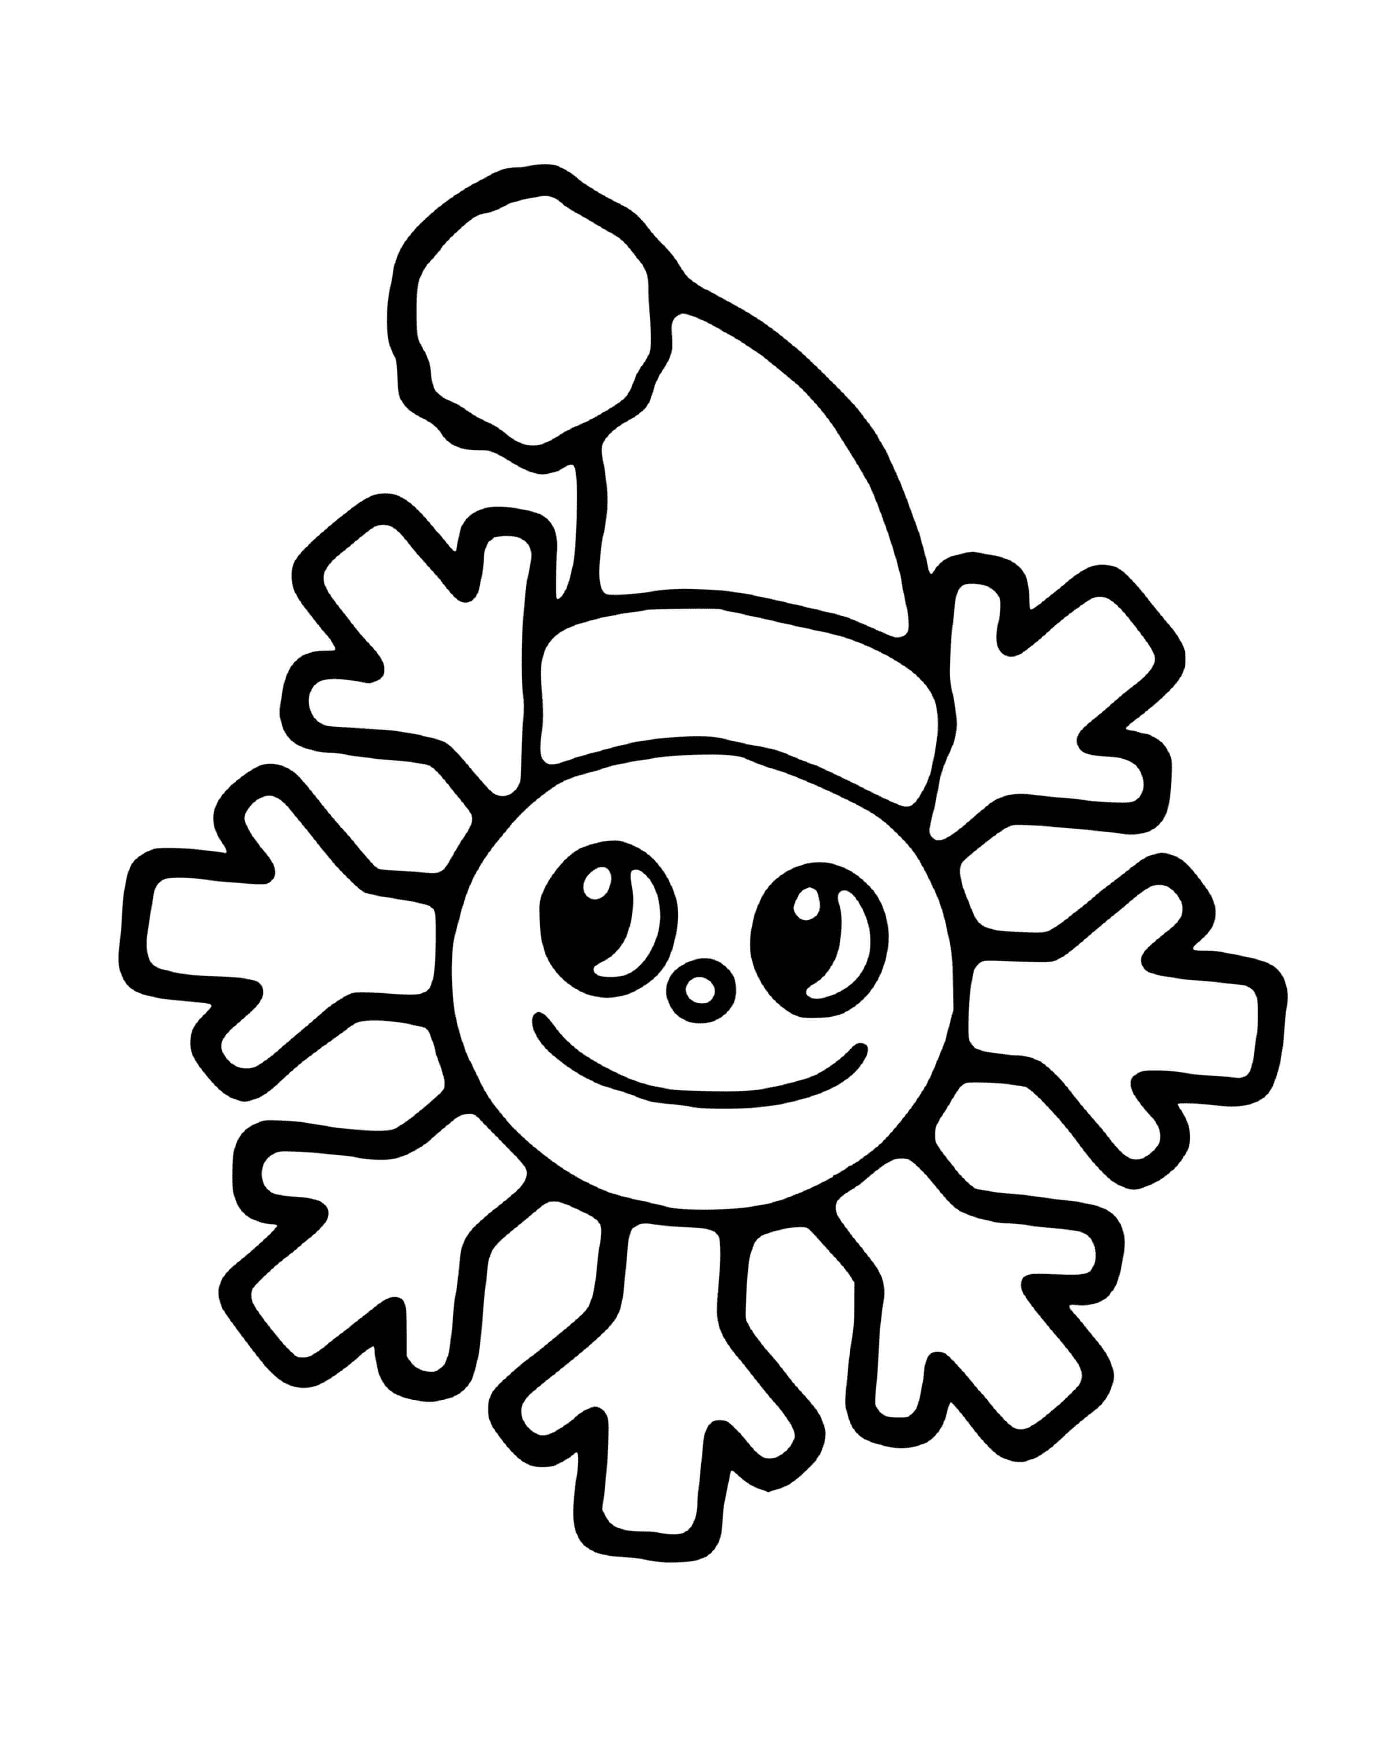 emoji flocon de neige avec un chapeau de noel